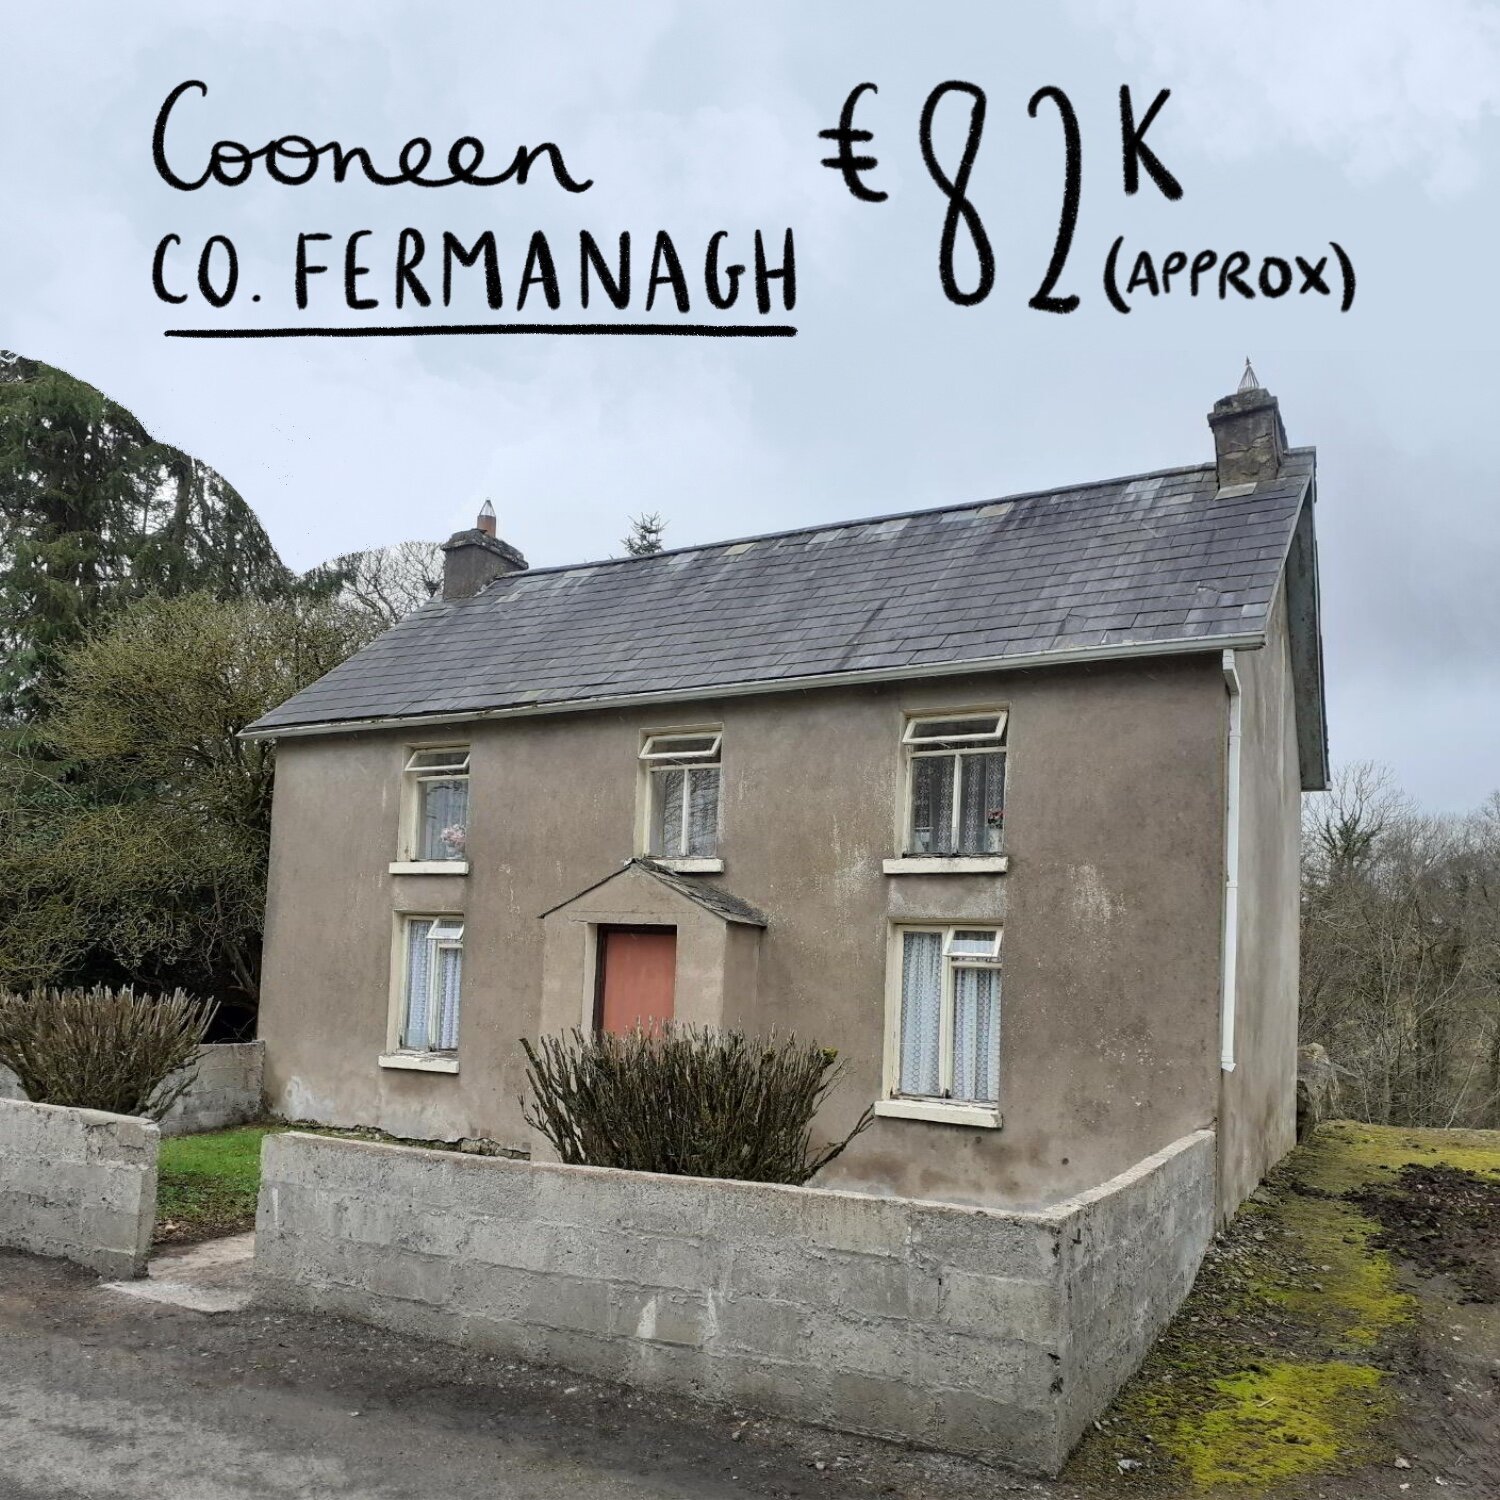 Cooneen, Co. Fermanagh. €82k